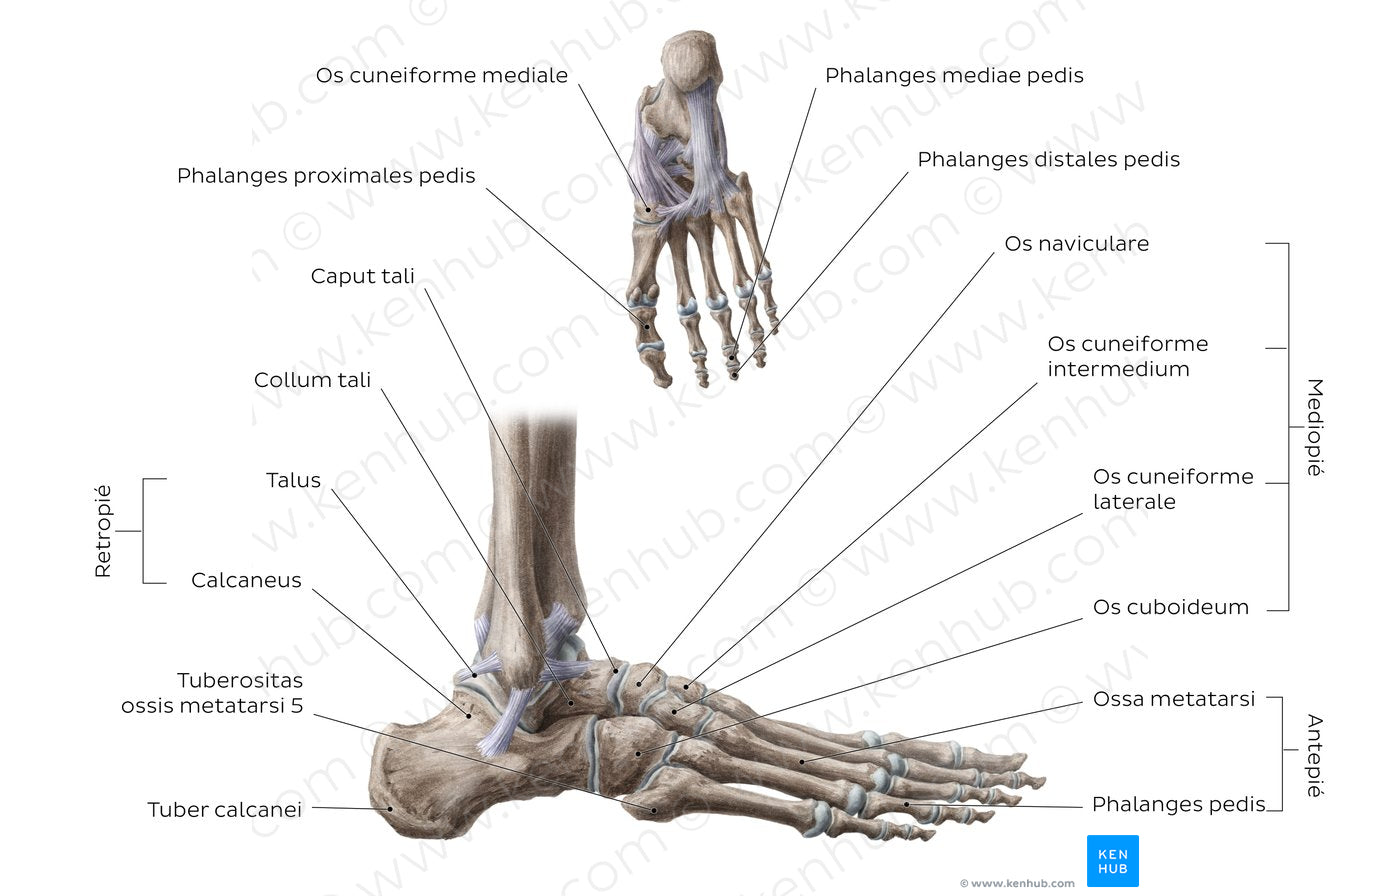 Bones of the foot (ES headlines) (Latin)